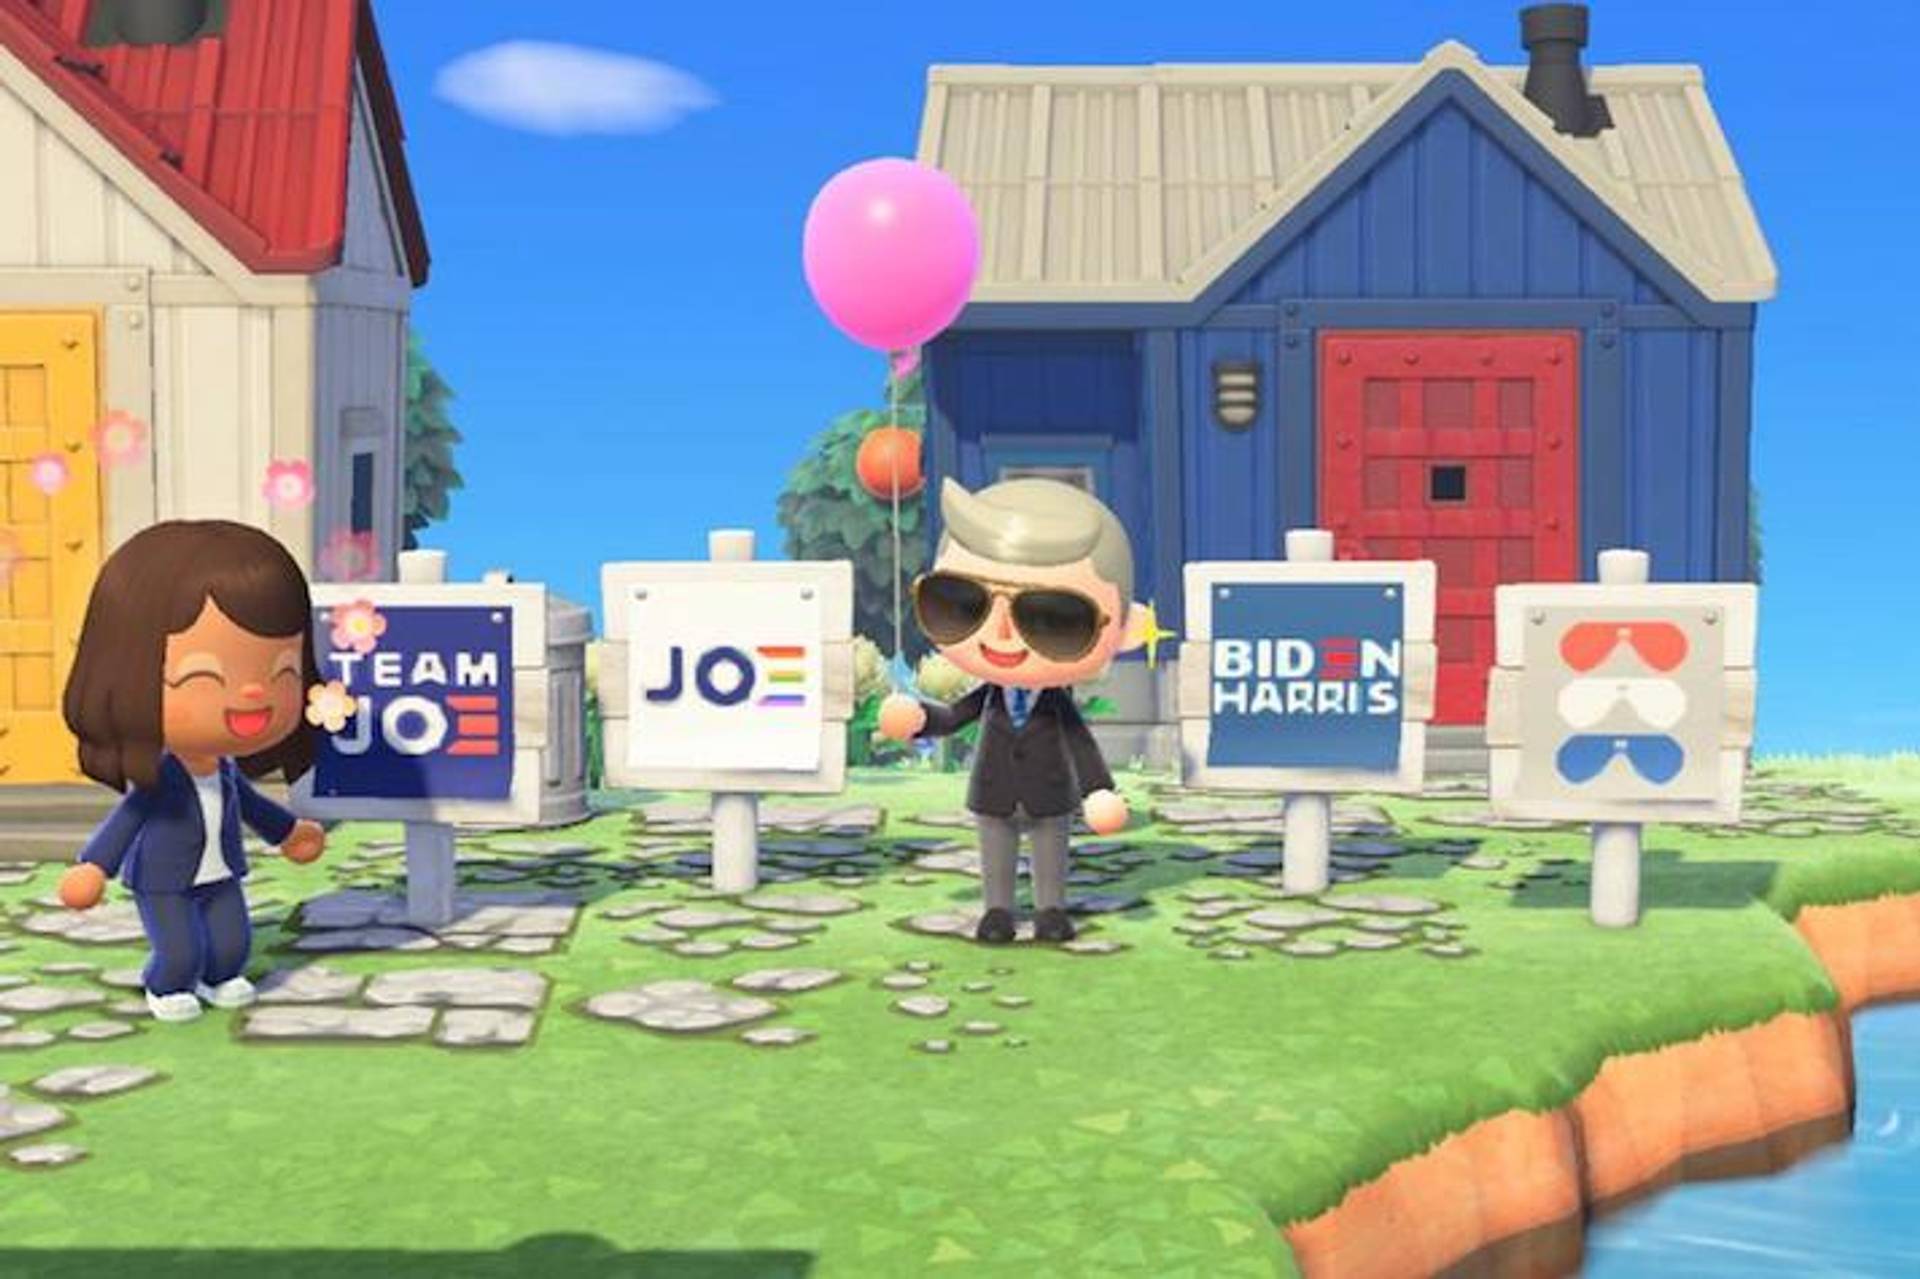 Biden yard signs let 'Animal Crossing' users play politics